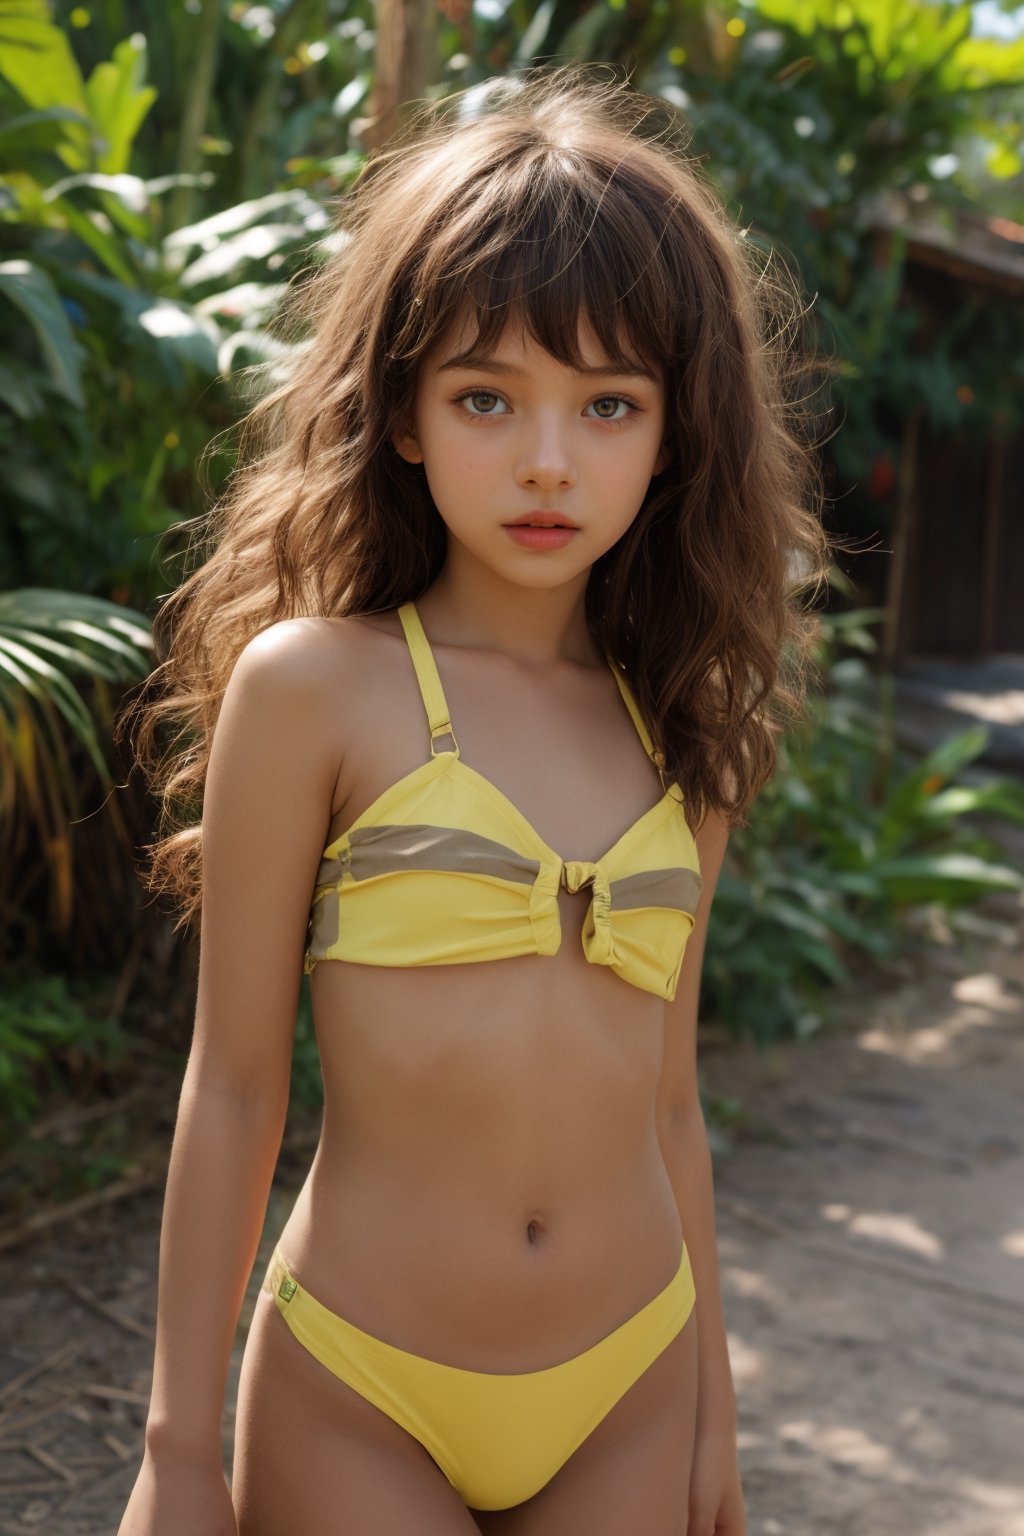 little brazil girl By David Dubnitskiy,